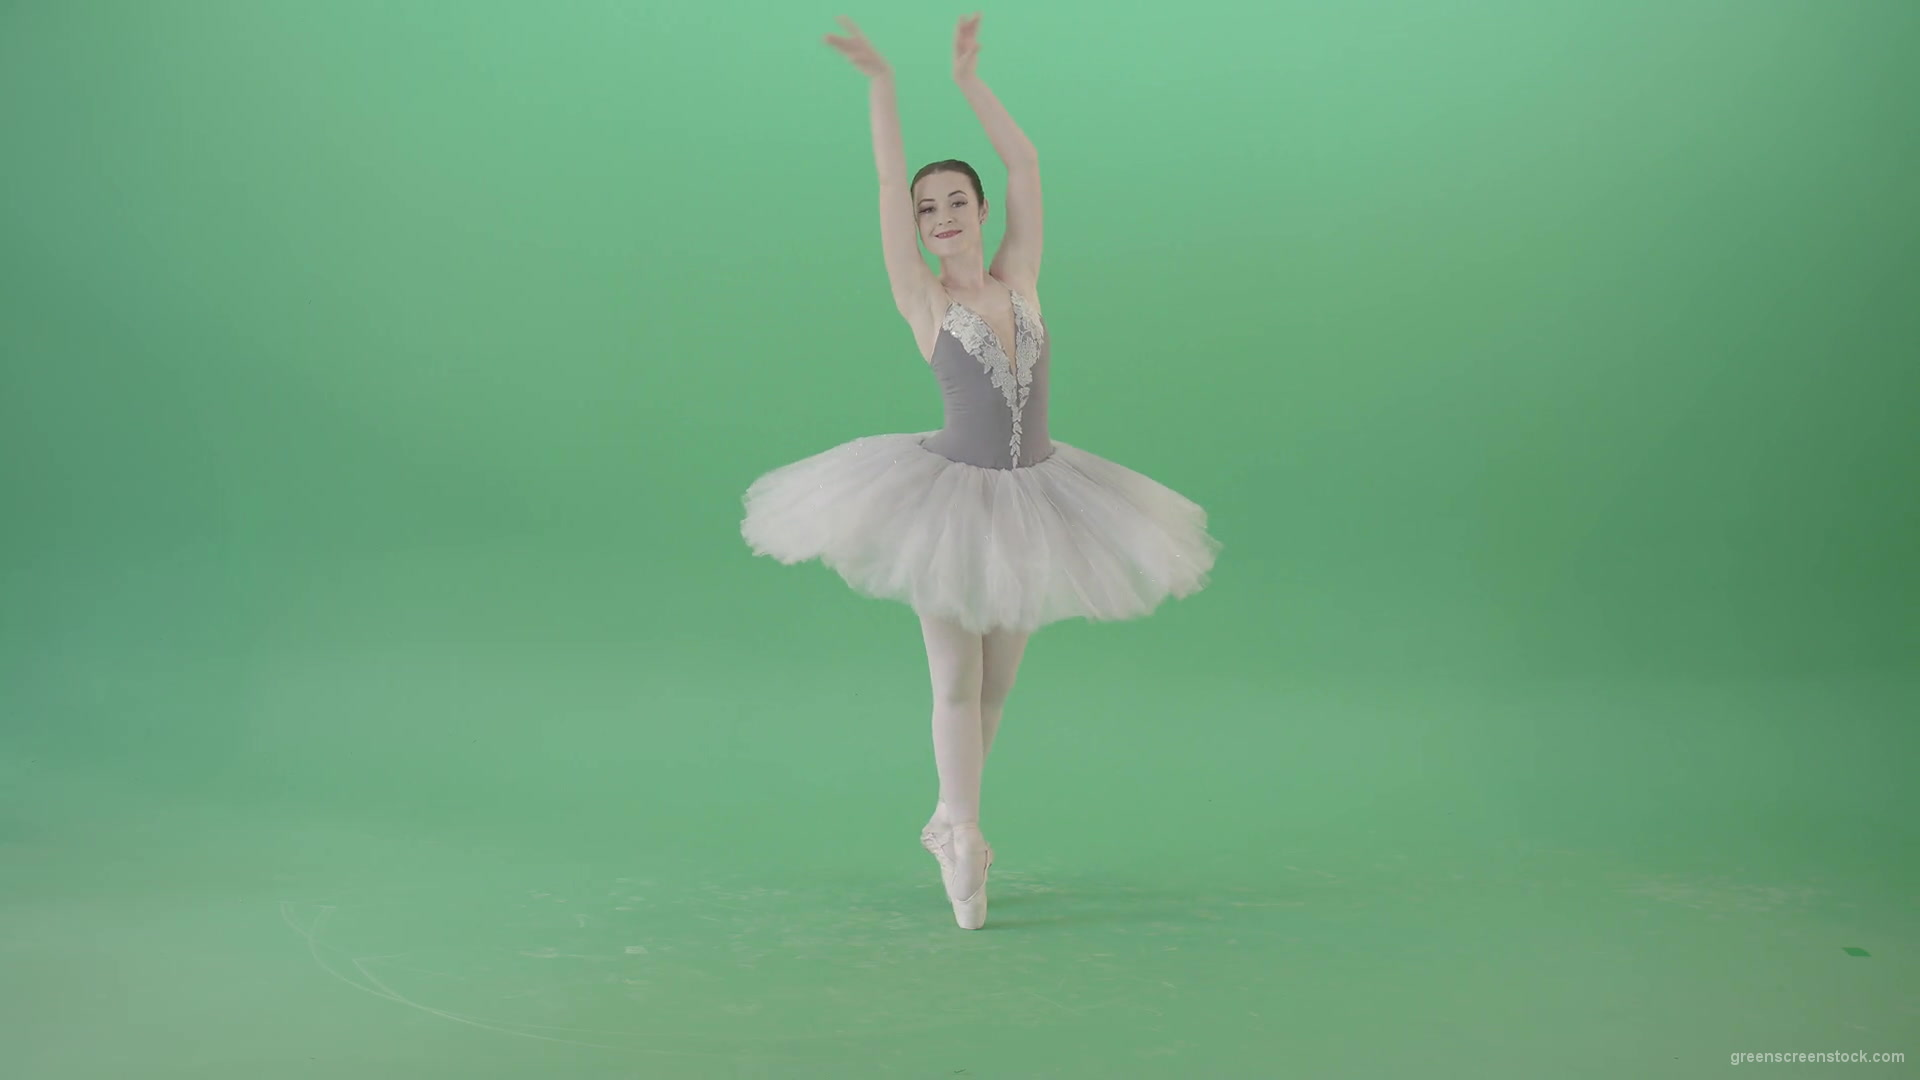 Ballerina-waving-hands-and-dance-on-green-screen-4K-Video-Footage-1920_004 Green Screen Stock